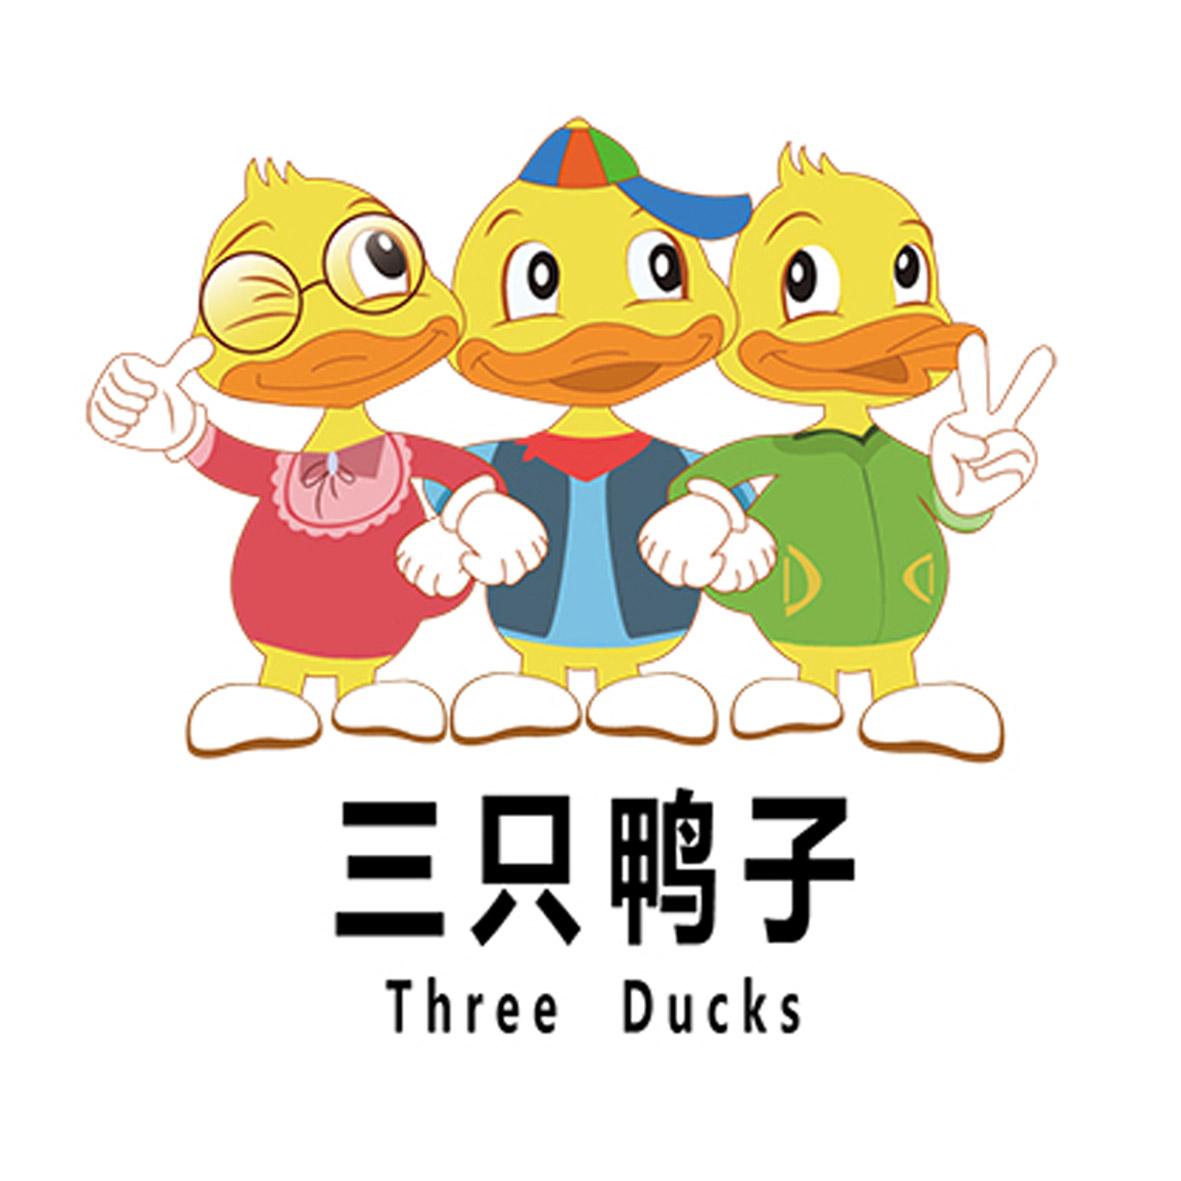 三只鸭子 three ducks